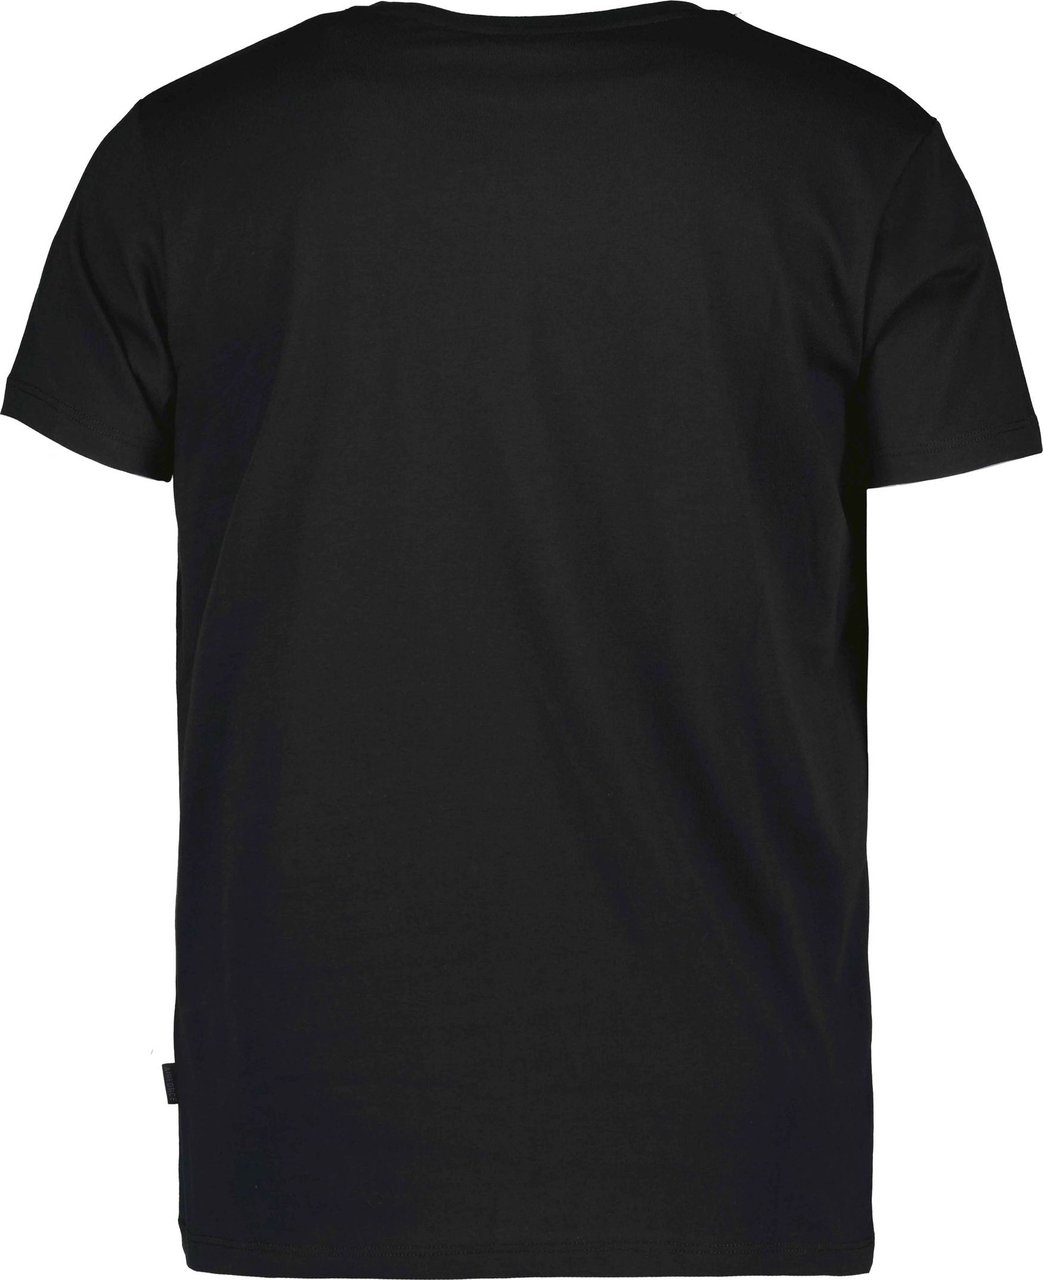 Airforce Airforce Basic T-shirt Zwart